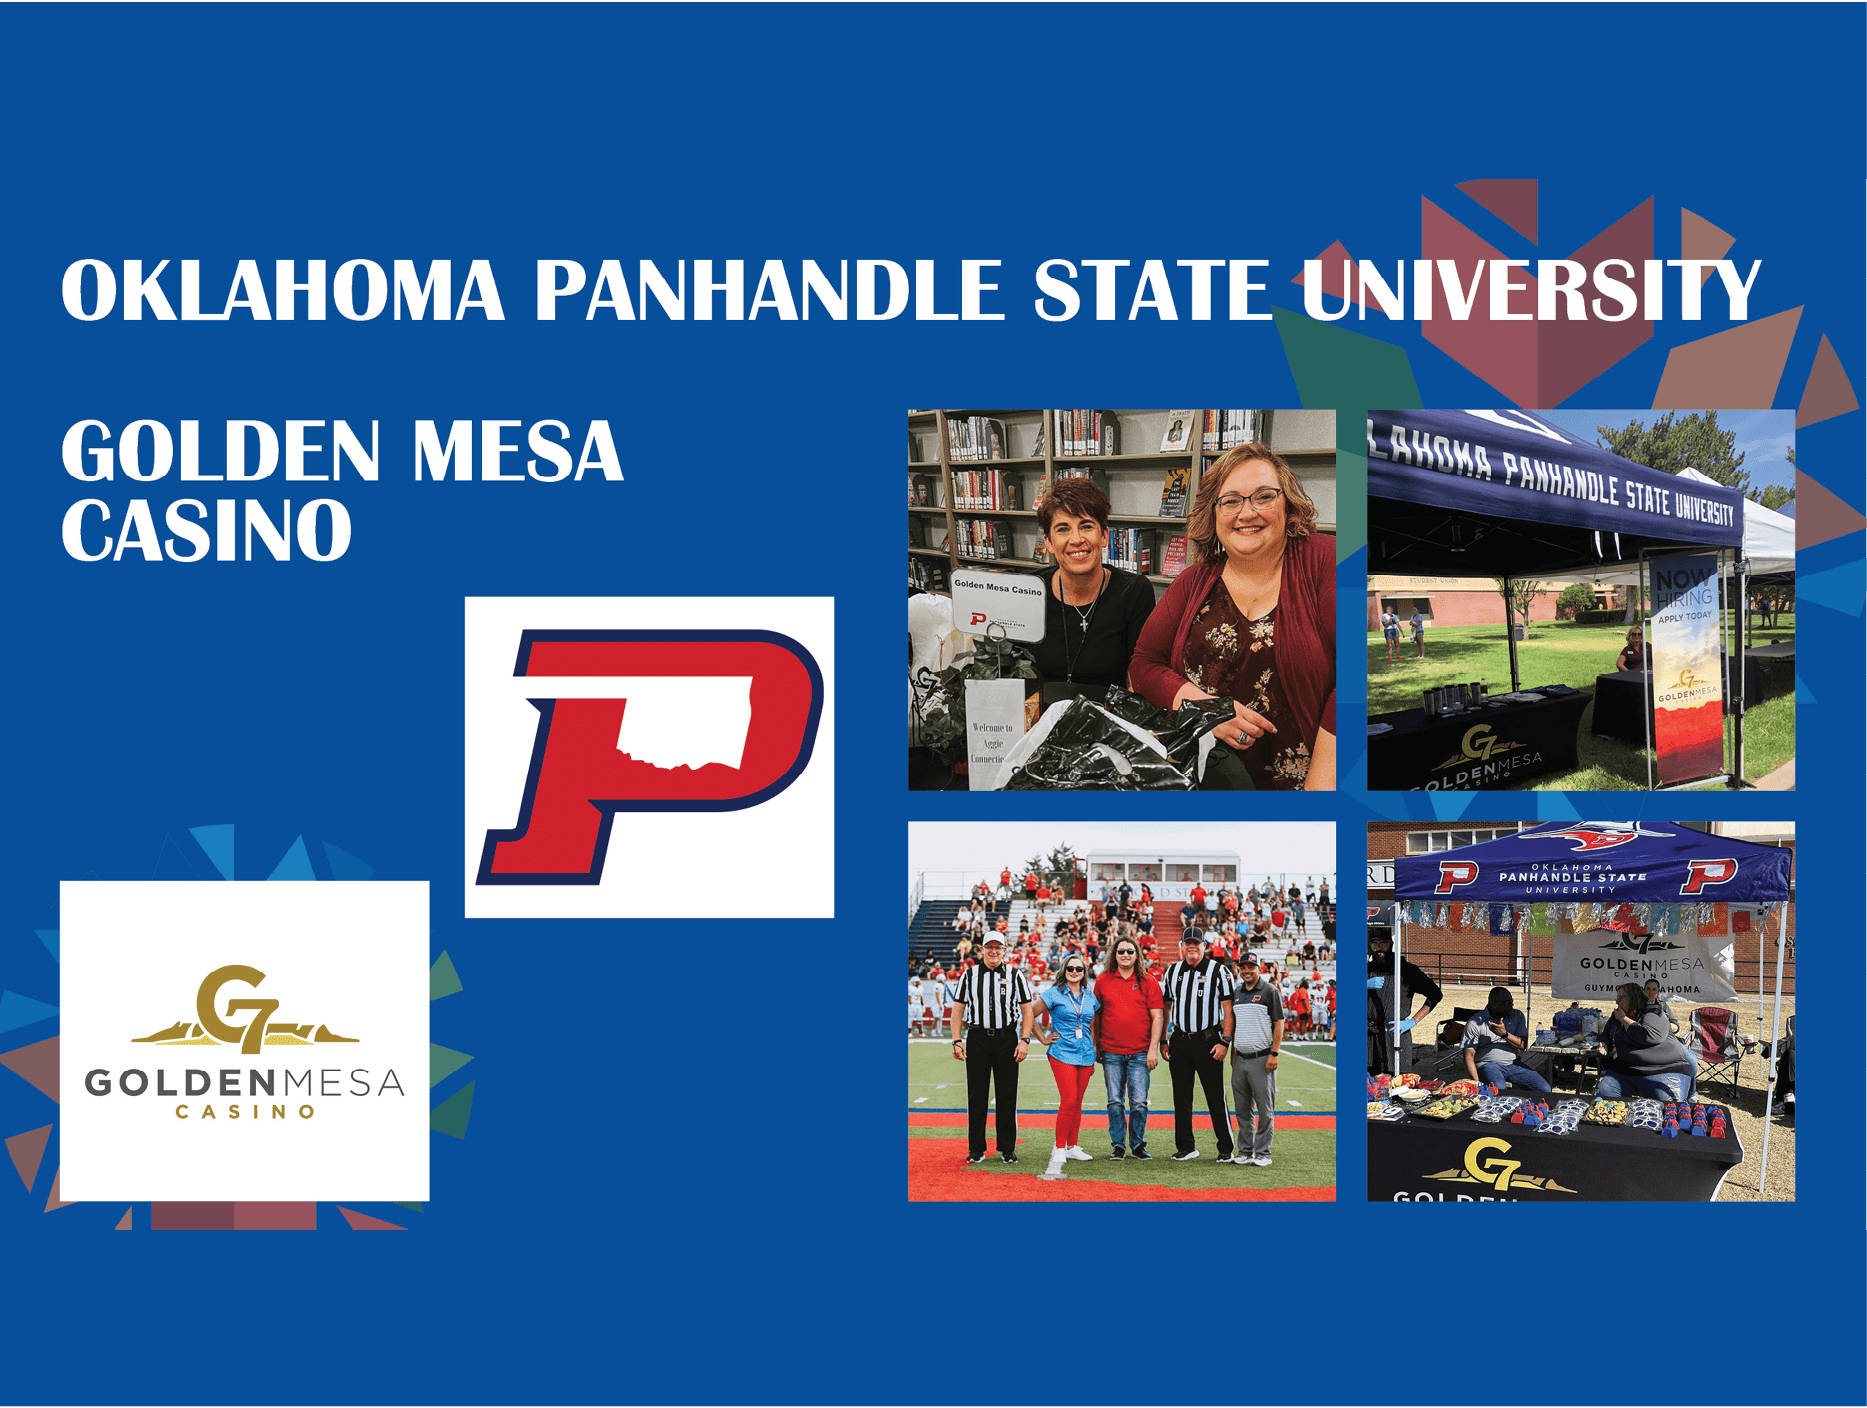 Oklahoma Panhandle State University and Golden Mesa Casino